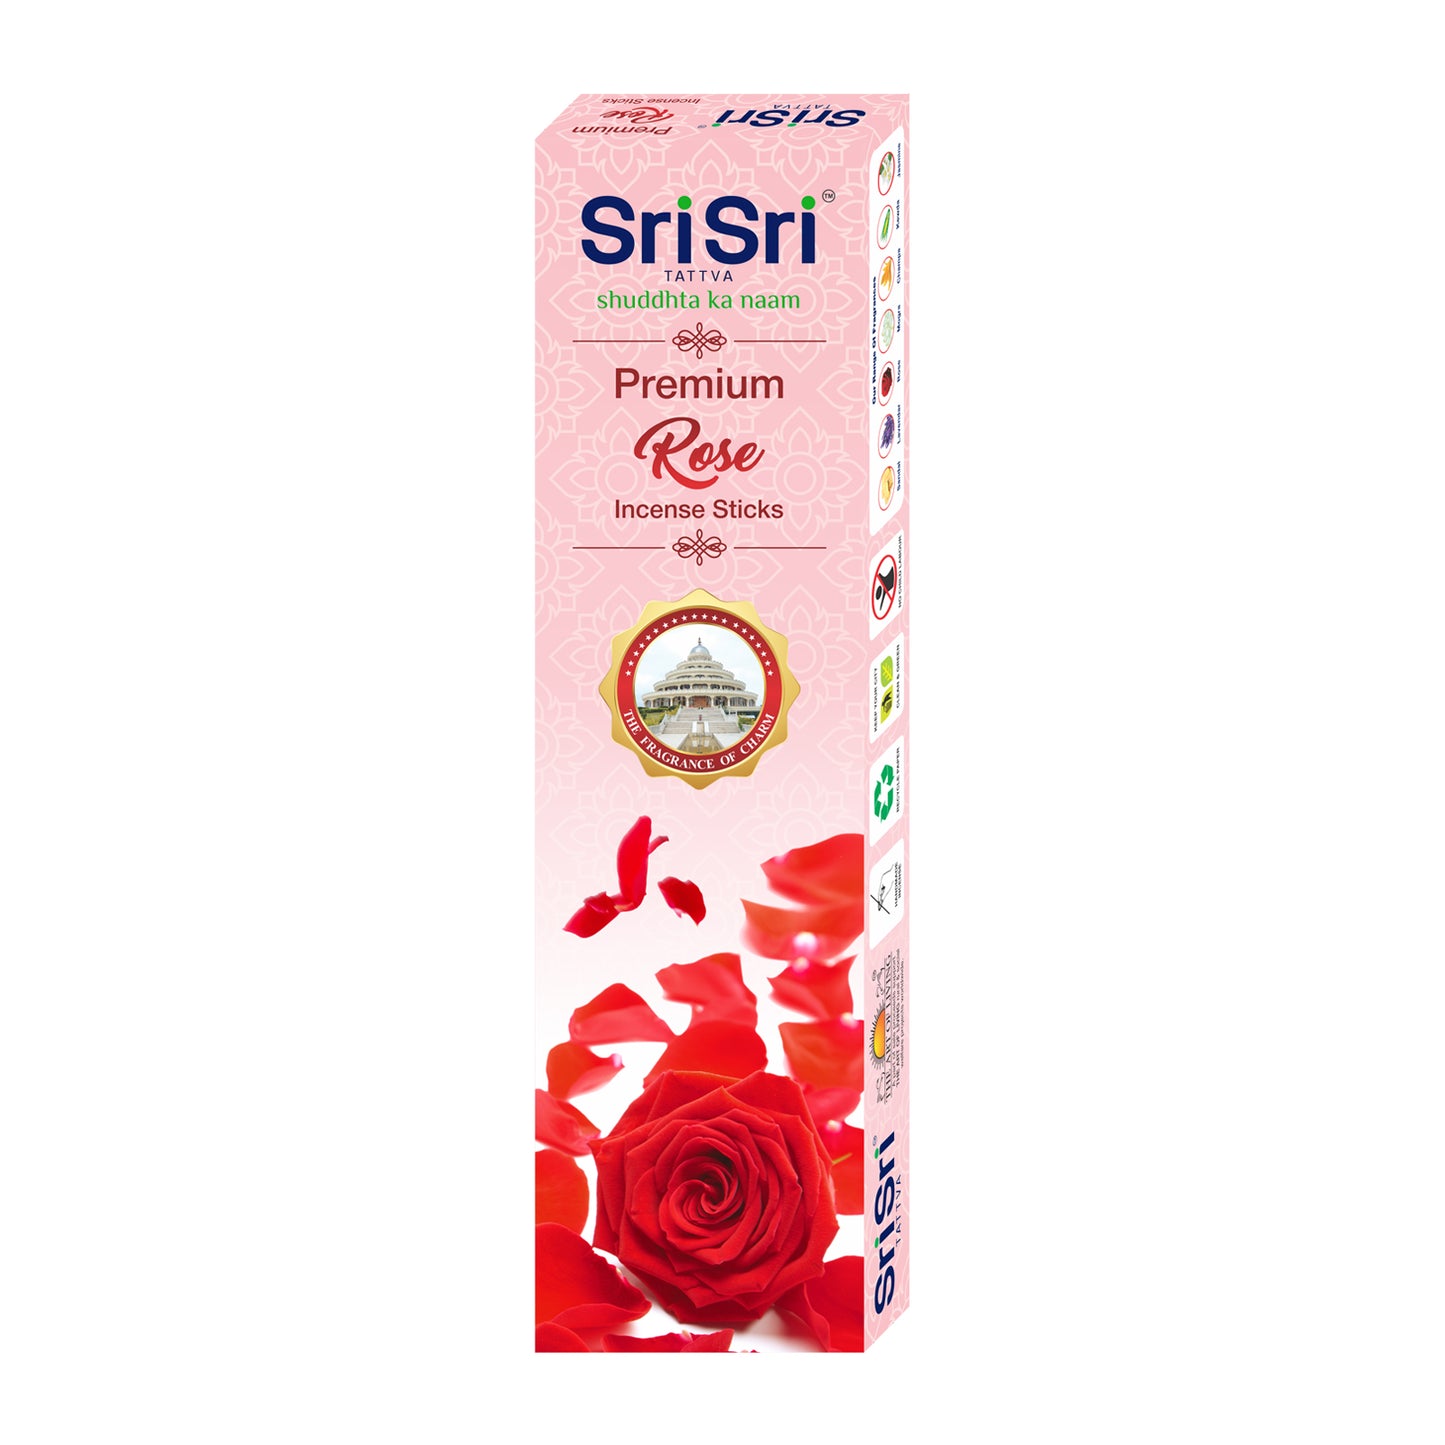 Premium Rose Incense Sticks For Pooja | 55 Agarbatti Sticks | Fragrances – Natural Rose | 100 g